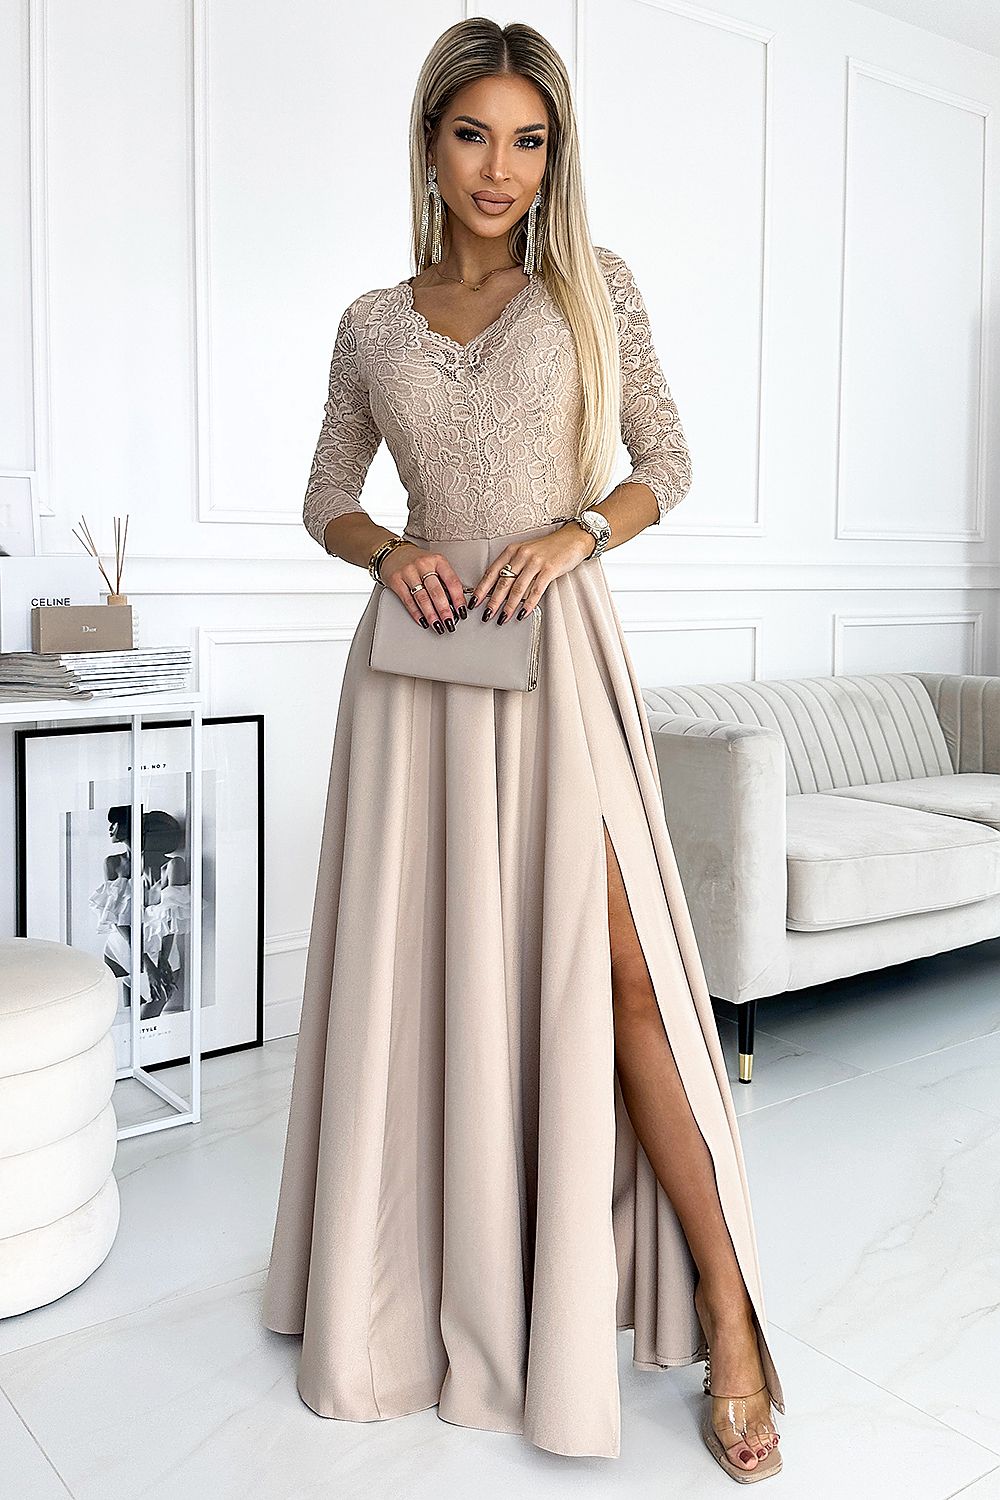 Numoco European Brand Full Size Elegant Long Gown Maxi Dress